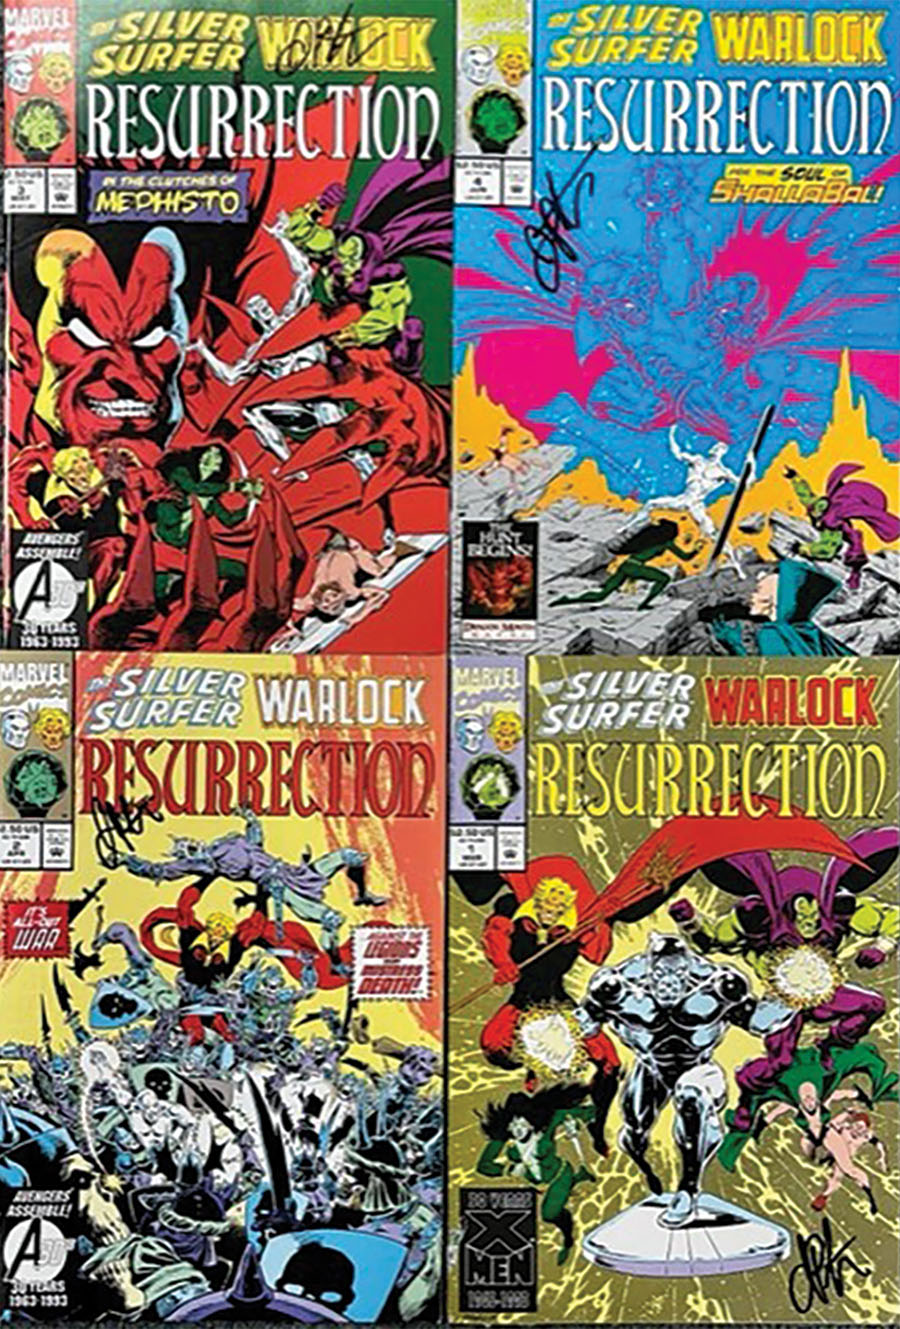 Silver Surfer Warlock Resurrection #1-4 DF Complete Master Set Jim Starlin Personal File Copy Signed By Jim Starlin